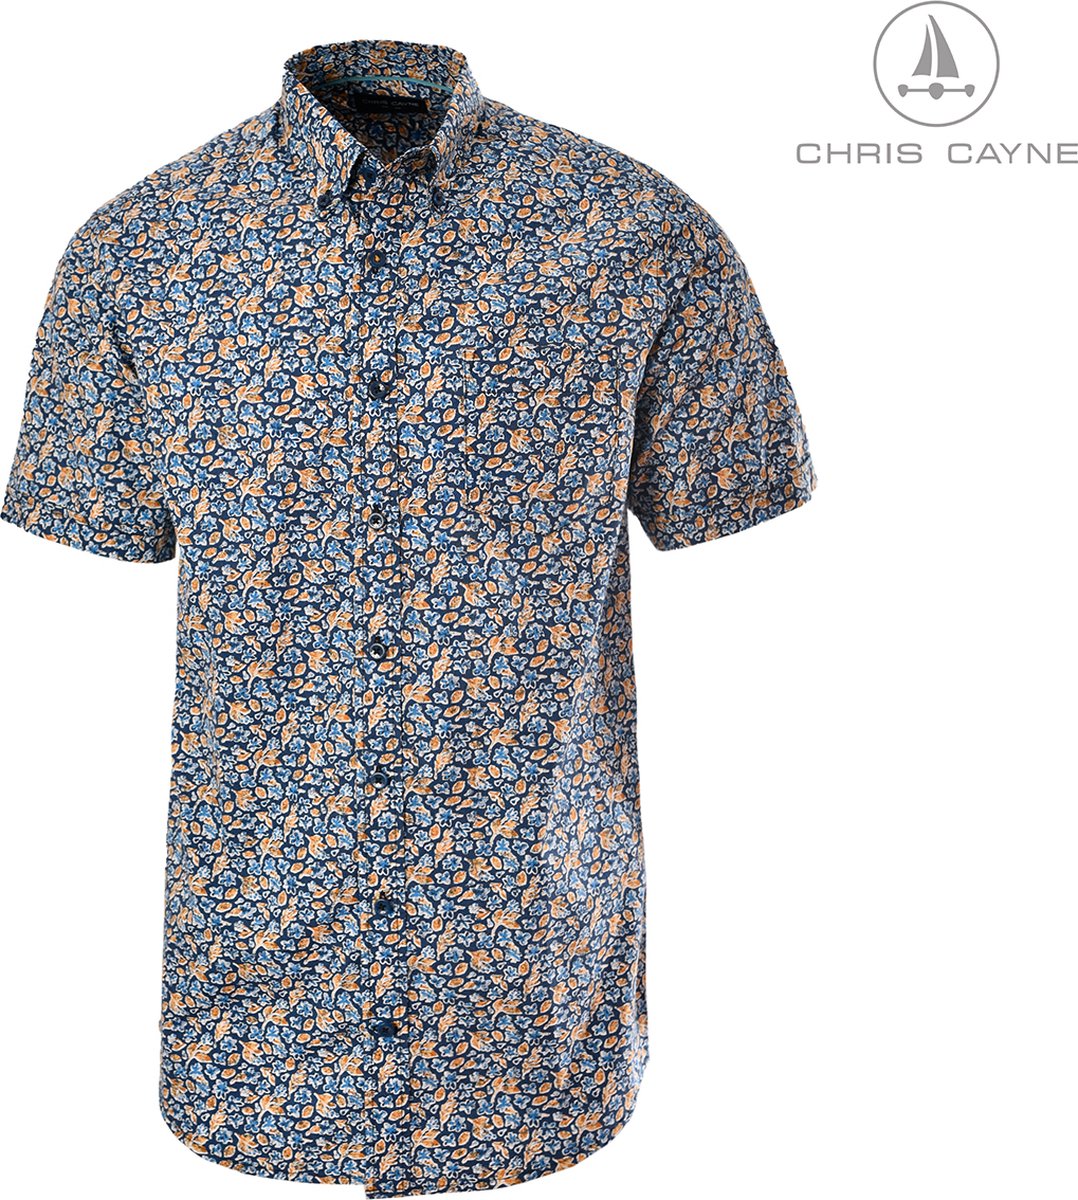 Chris Cayne heren blouse - overhemd 1996 blauw/oranje print - KM - maat XXL